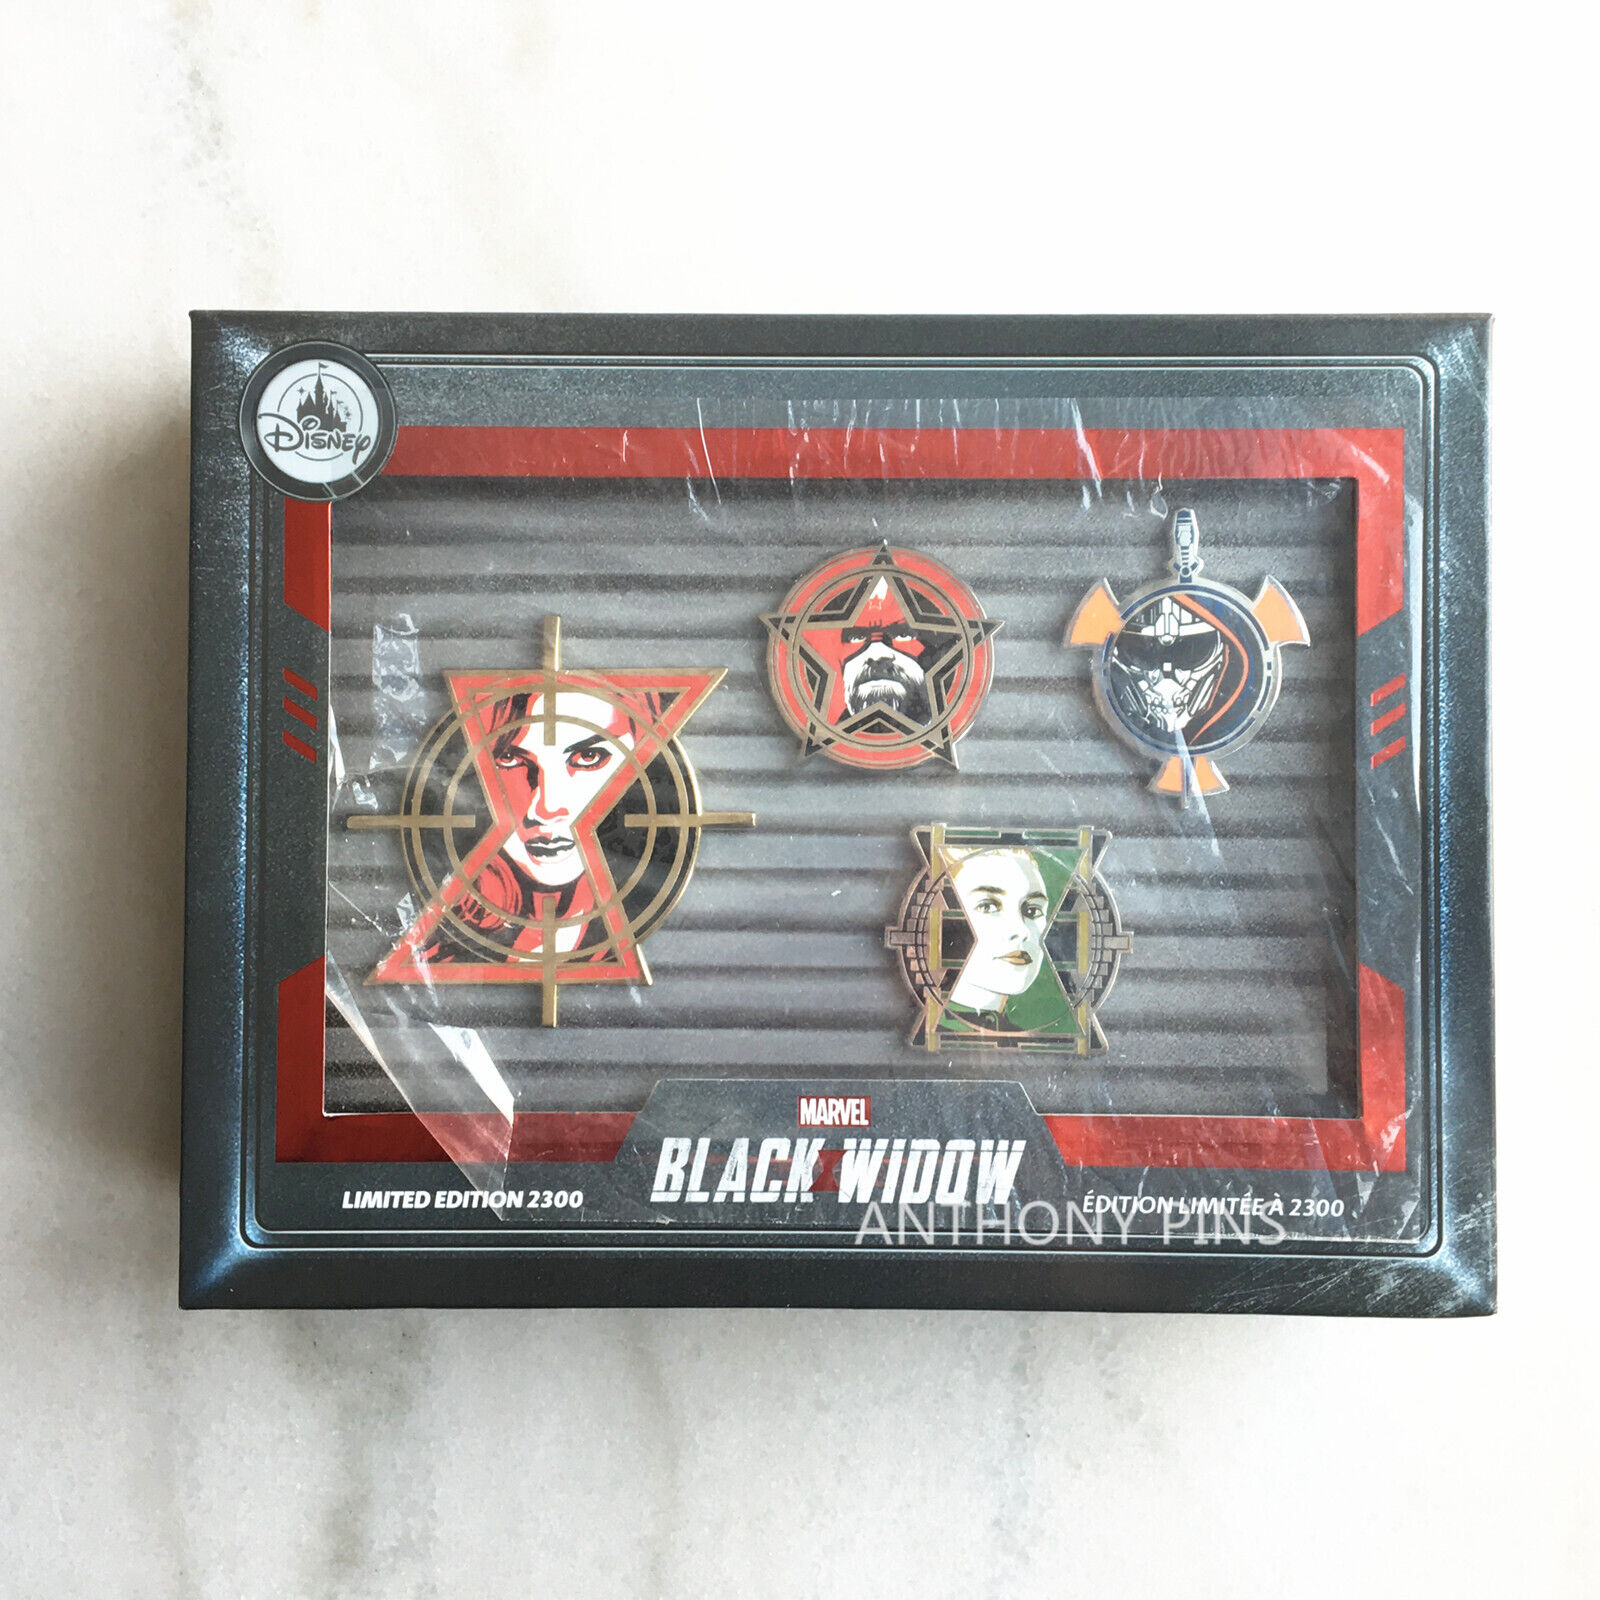 Disney Store 2021 Marvel Black Widow Pin Box LE 2300 Limited Edition Pins Set